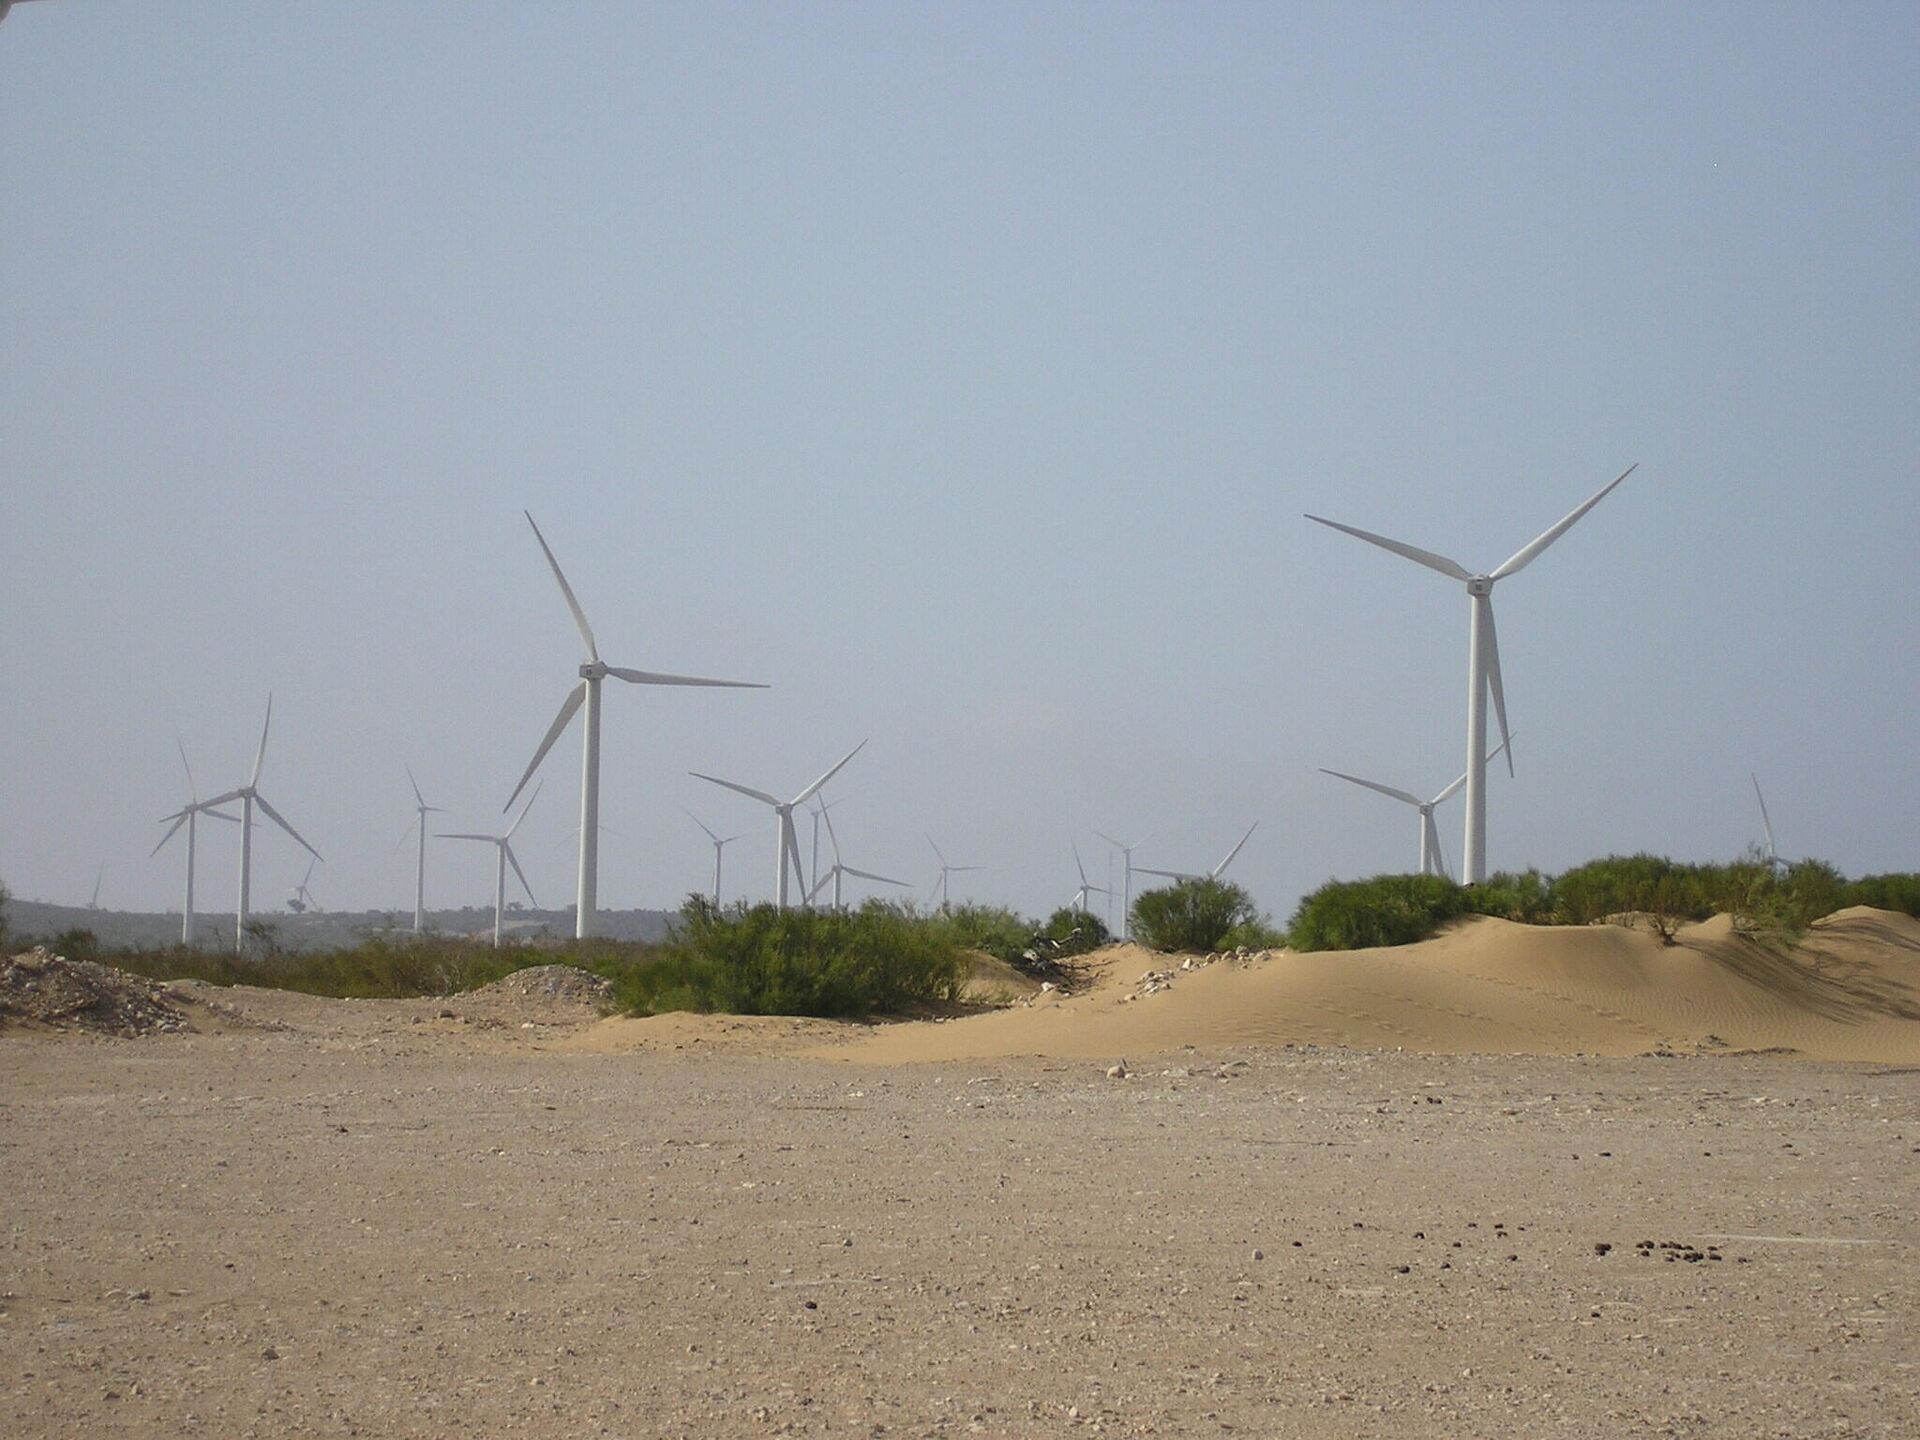 Amogdoul Wind Farm in Essaouira, Morocco - Sputnik International, 1920, 25.10.2021